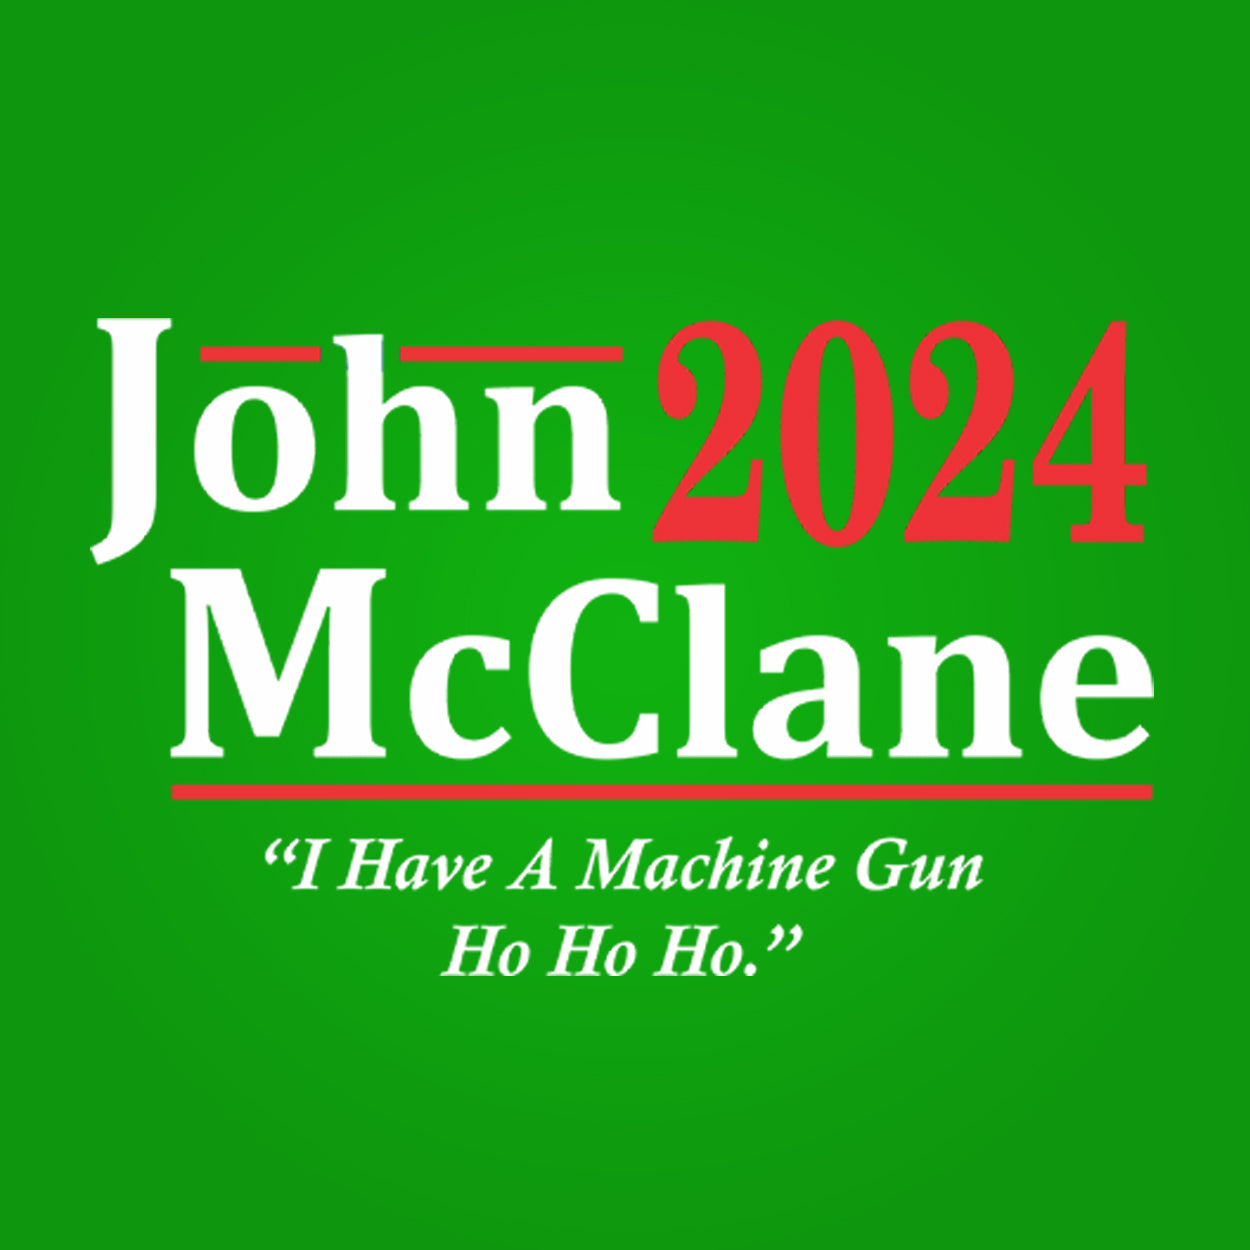 John McClane 2024 Election